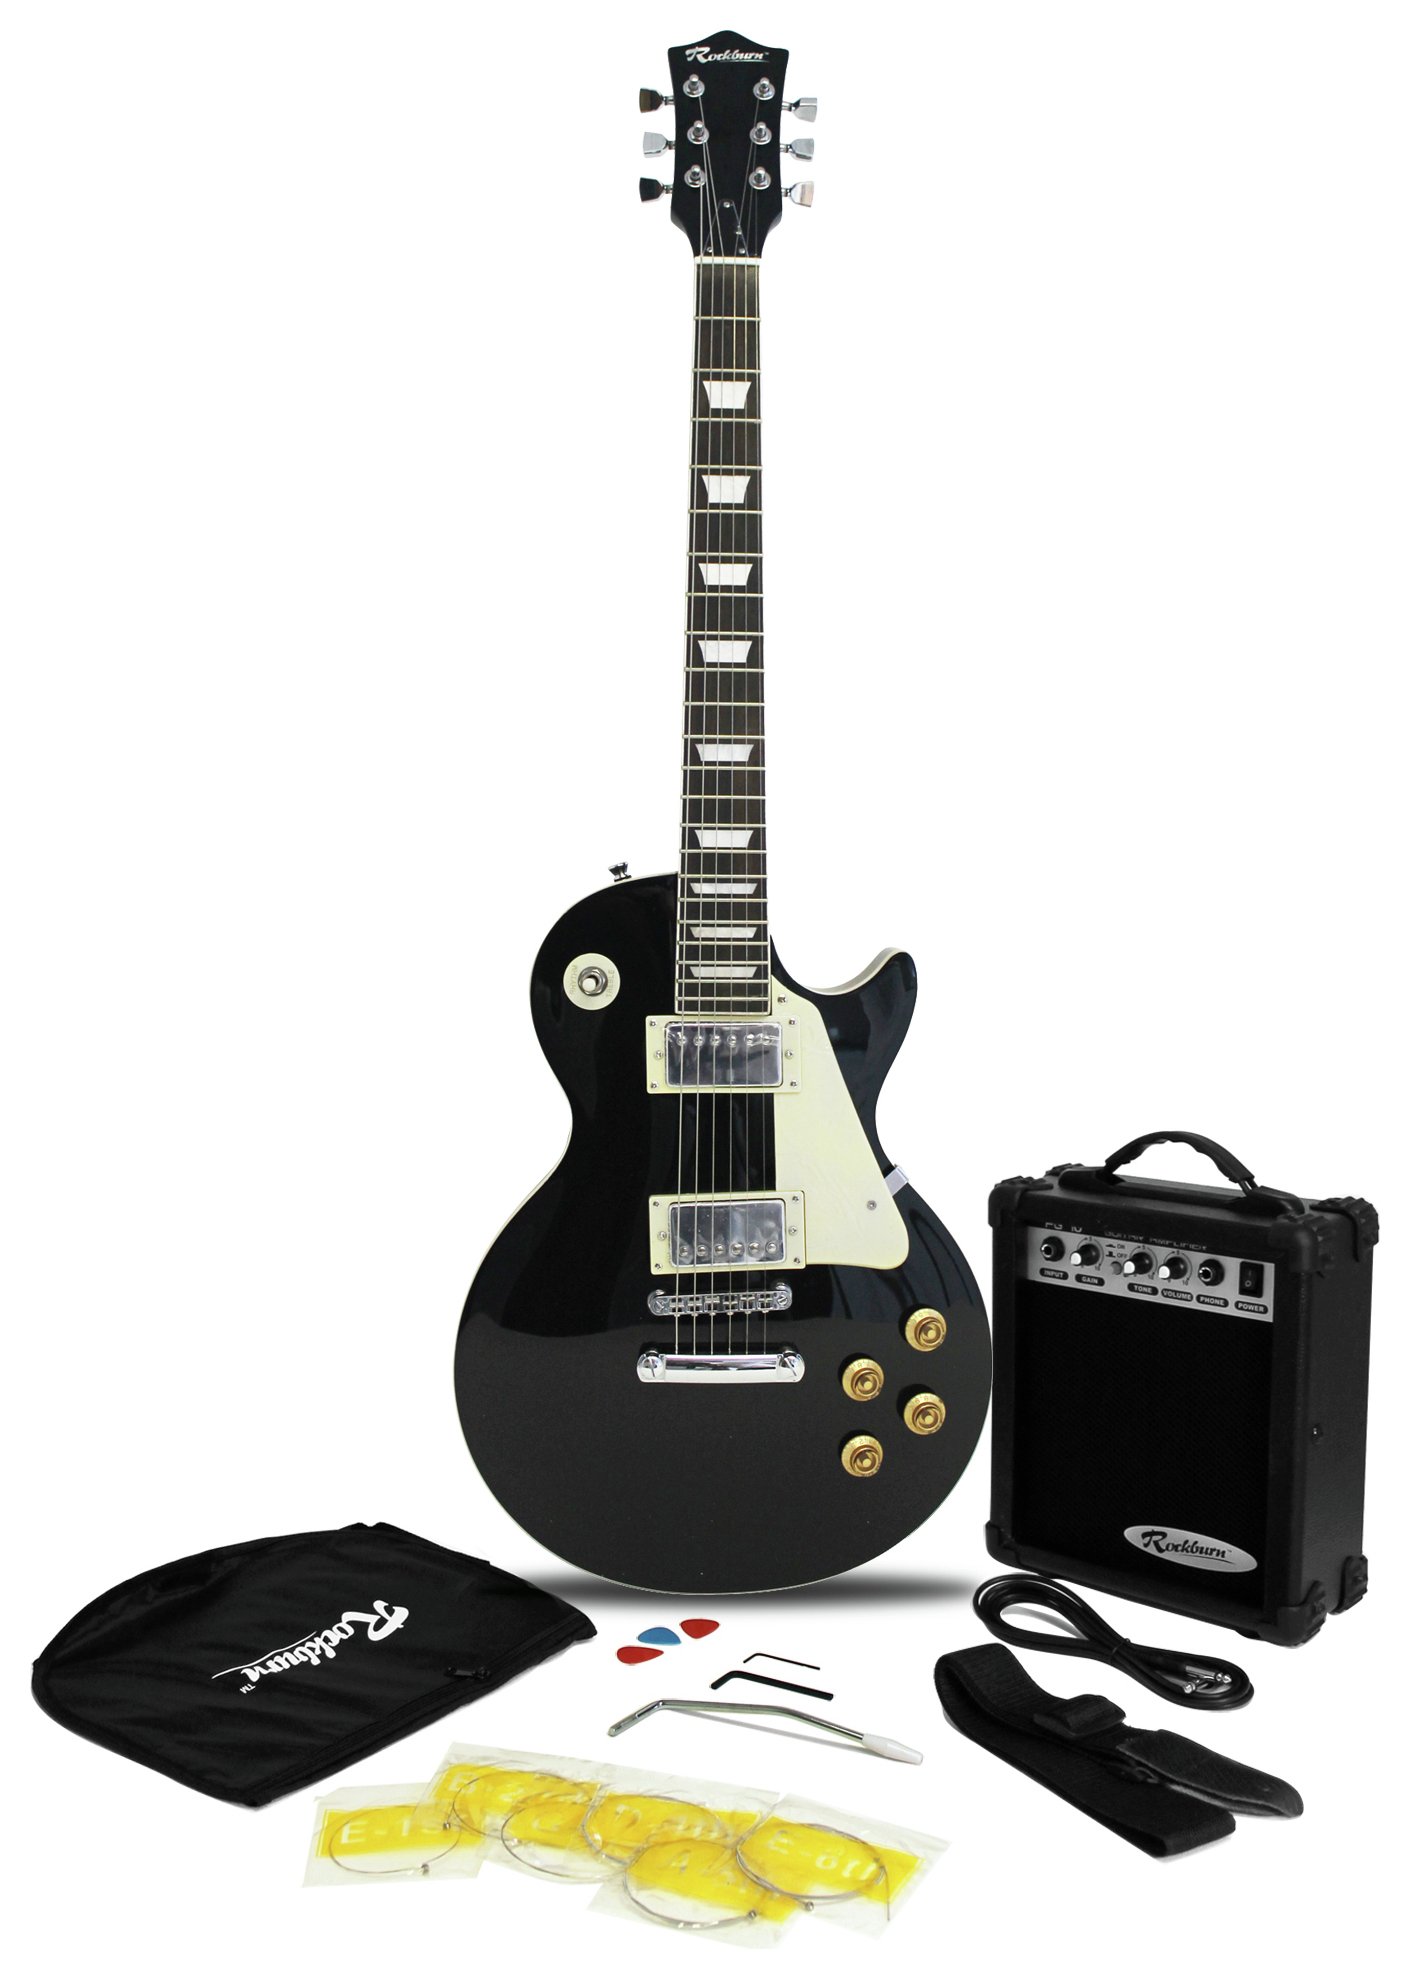 Rockburn Electric Guitar Amp Pack - Black